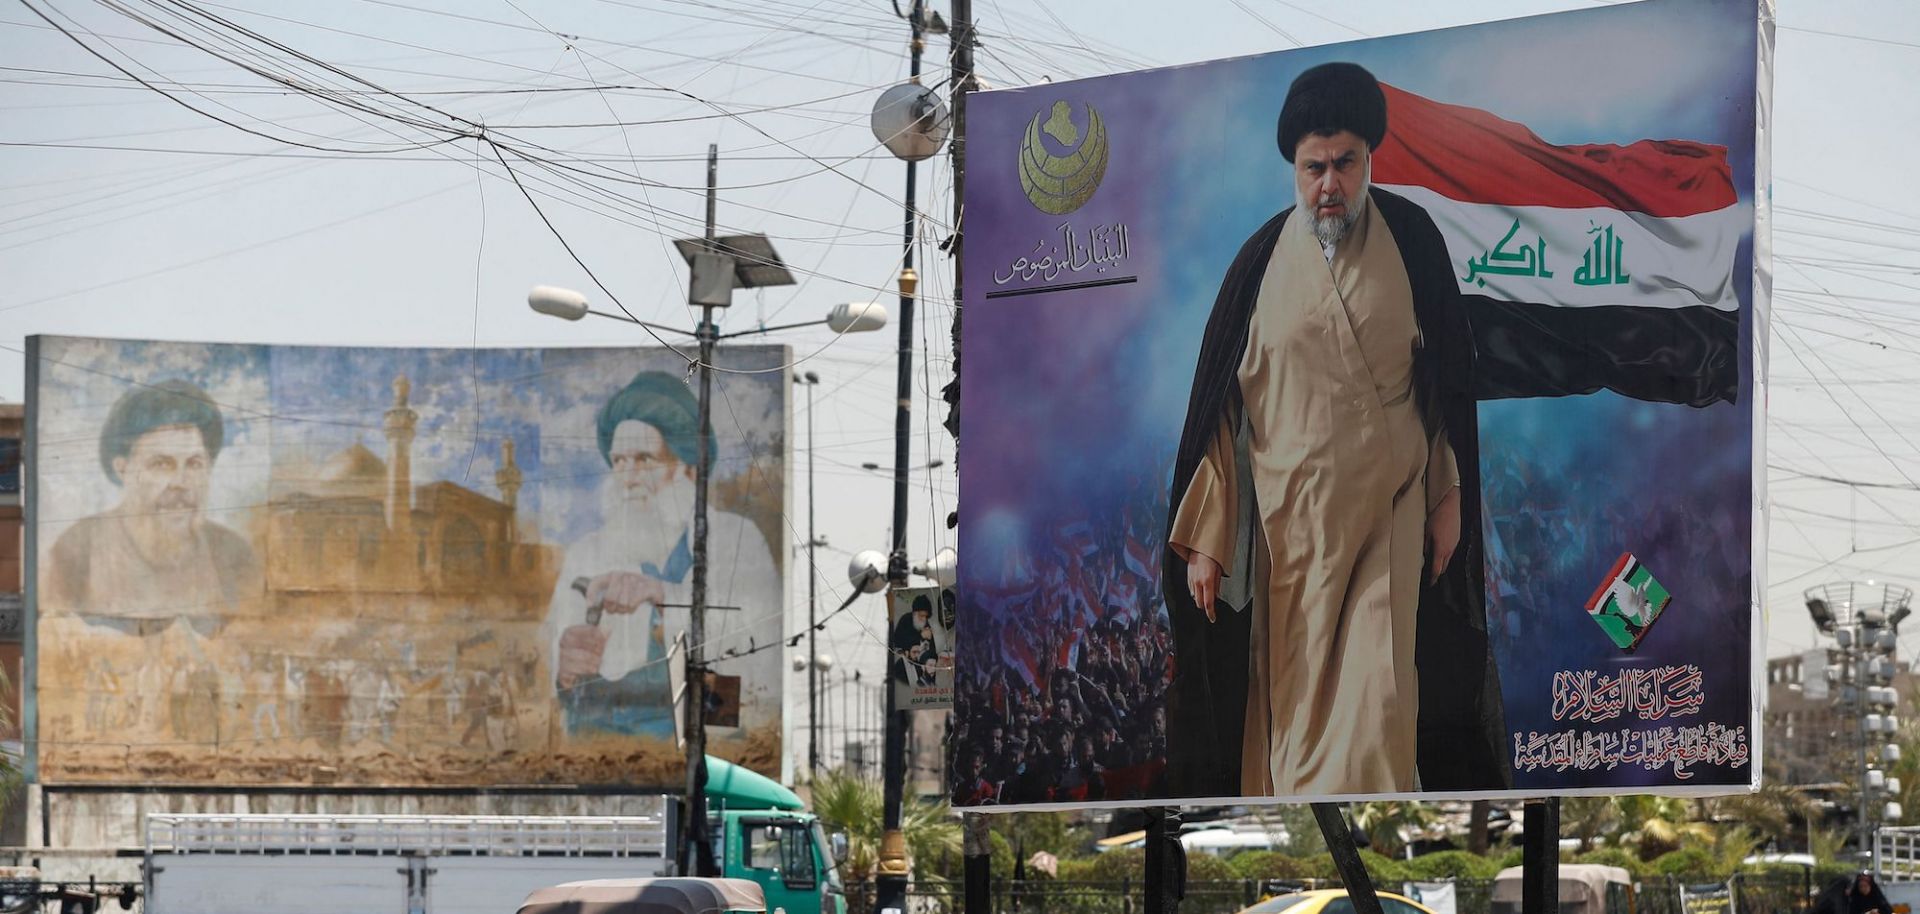 A tuk-tuk car drives past a large poster of Shiite cleric Moqtada al-Sadr, in al-Sadr City, Iraq, on July 15, 2021. 